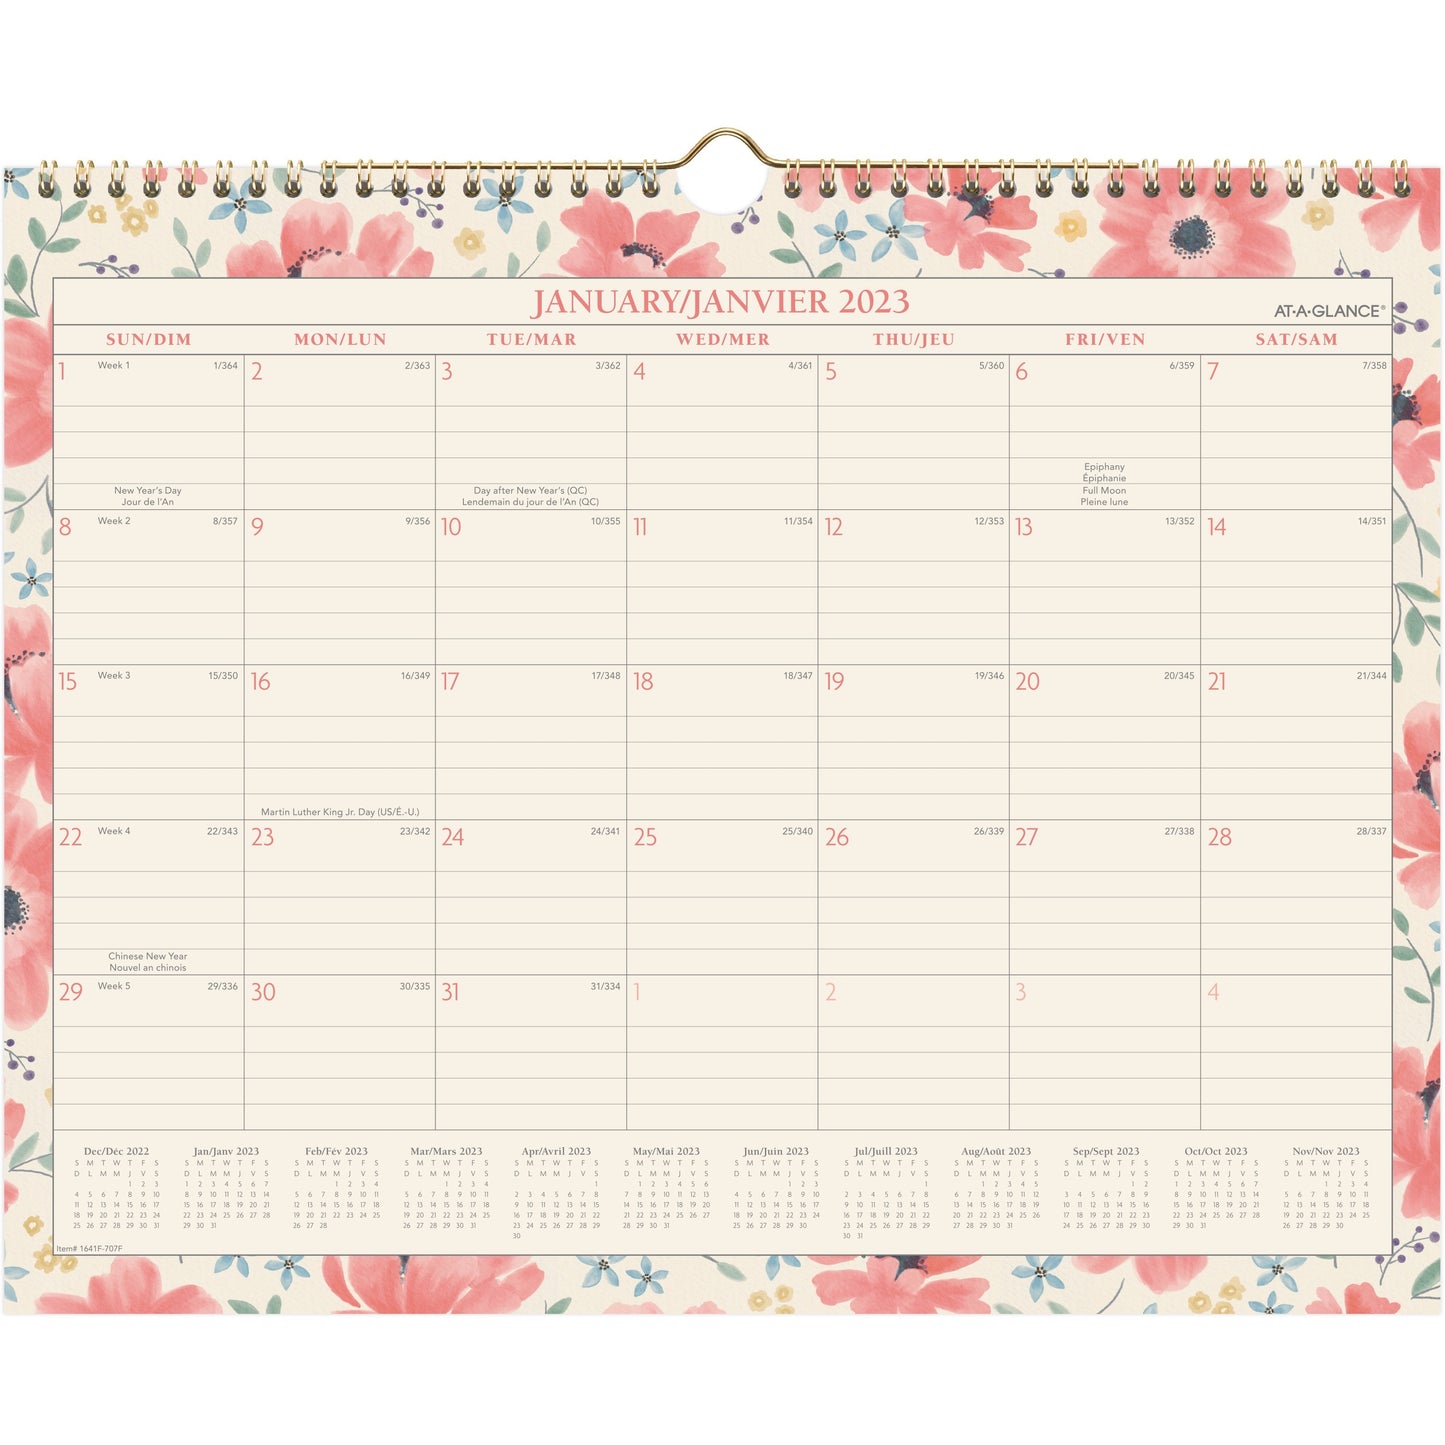 At-A-Glance Floral Calendar